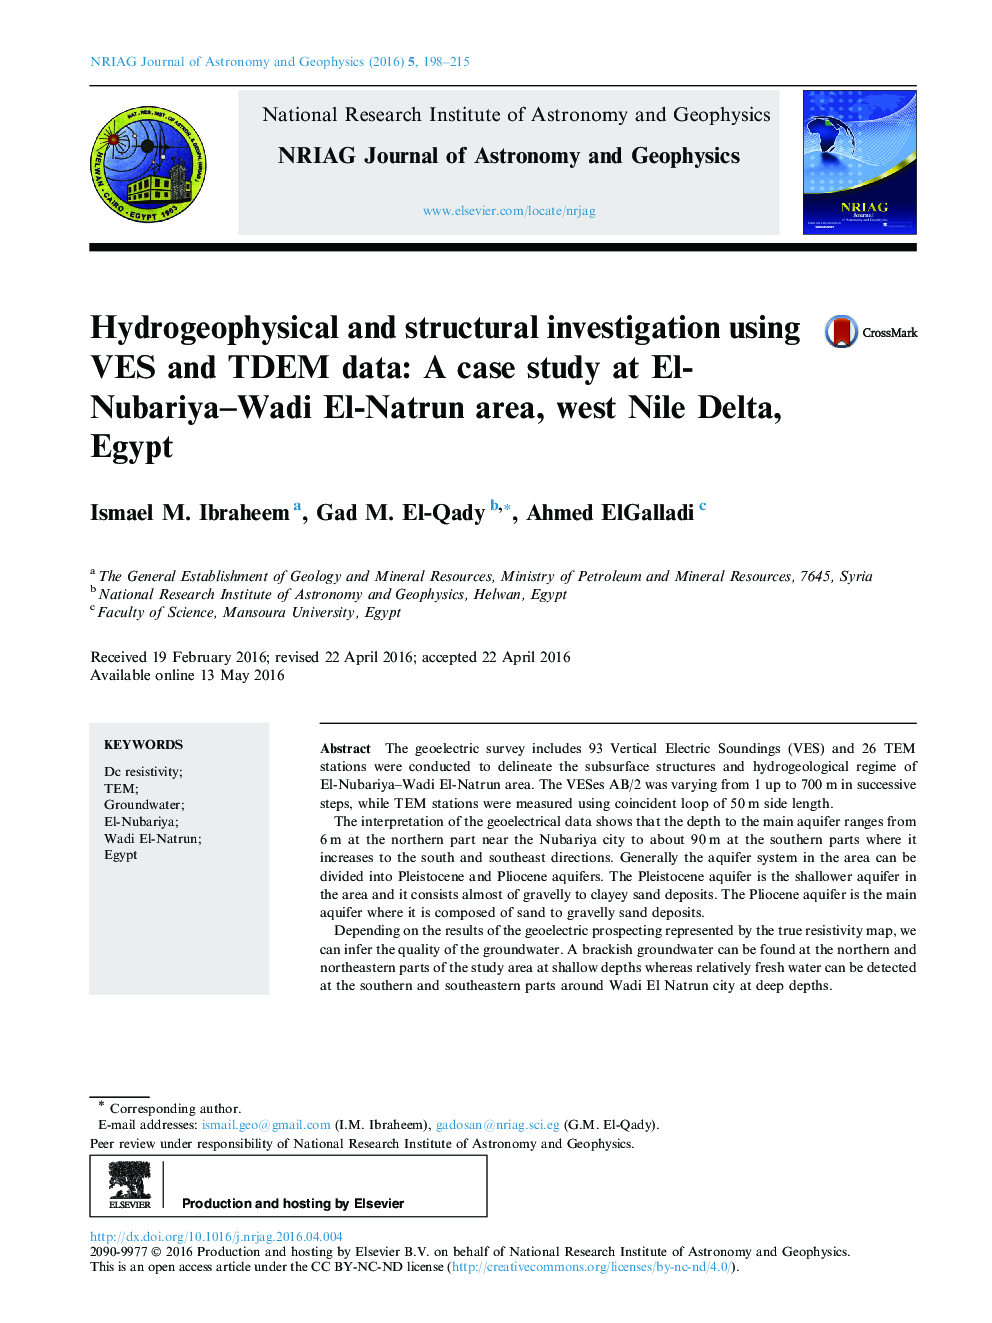 Hydrogeophysical and structural investigation using VES and TDEM data: A case study at El-Nubariya-Wadi El-Natrun area, west Nile Delta, Egypt